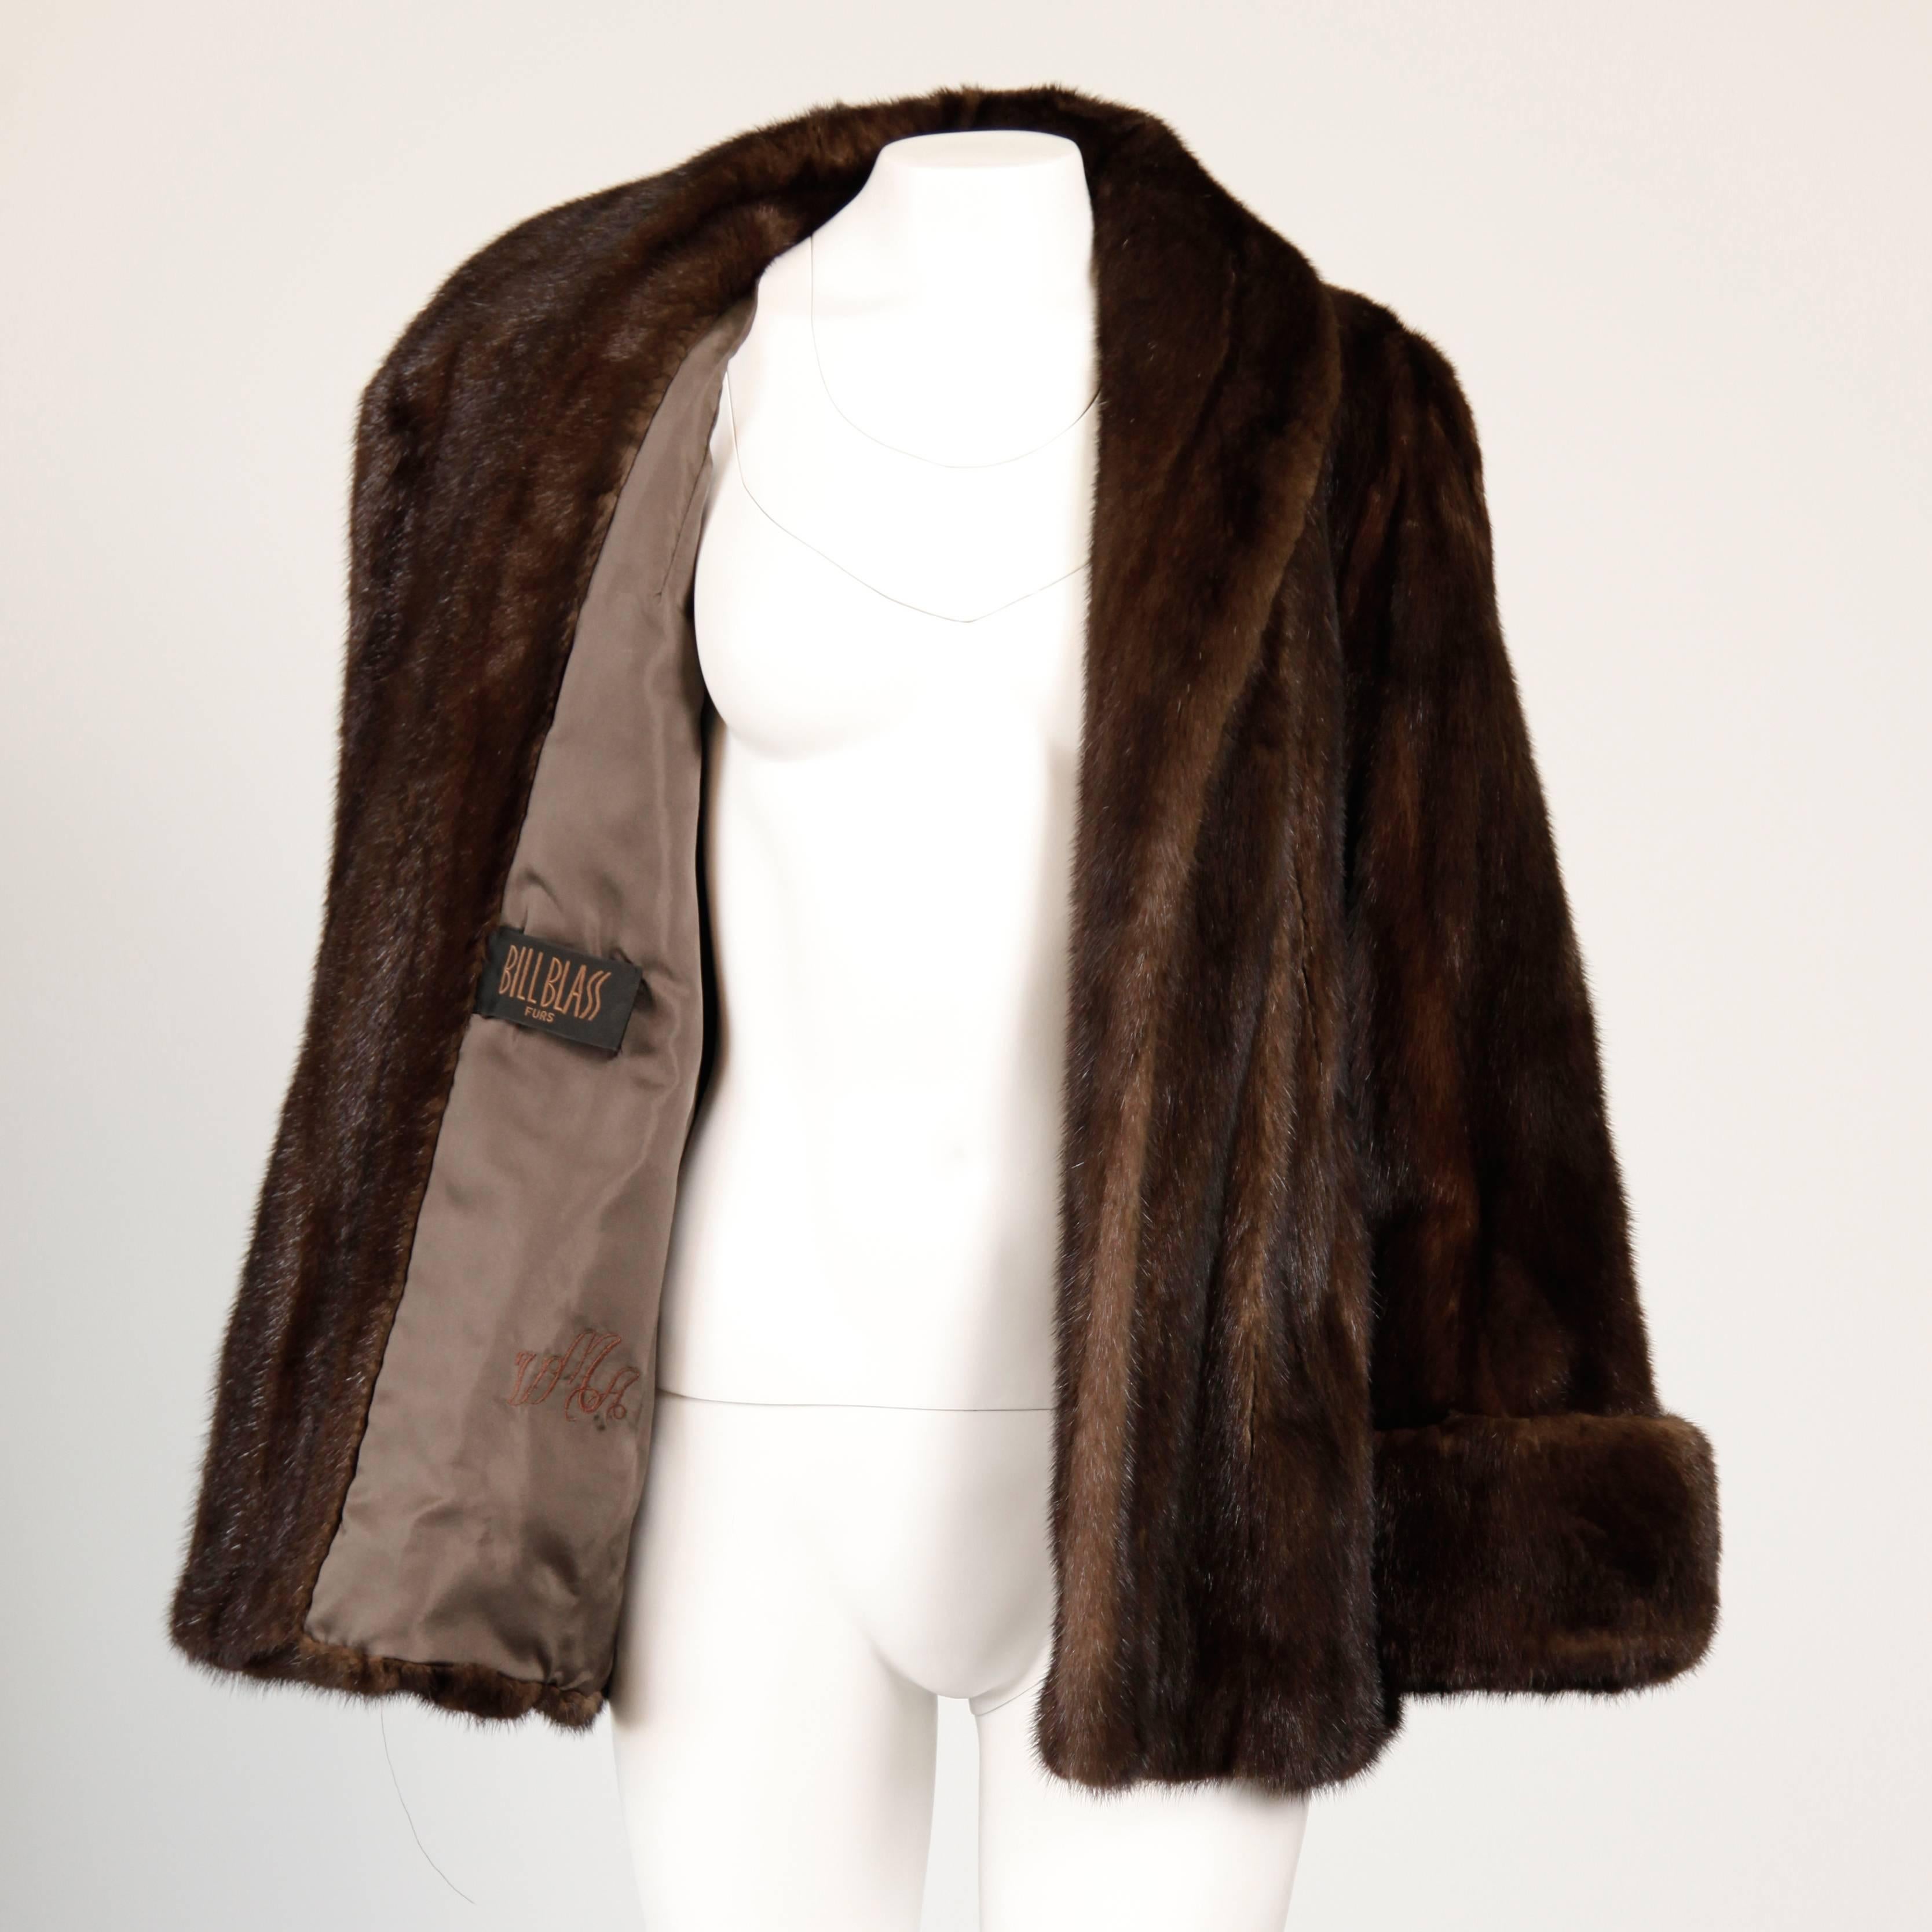 Stunning 1970s Bill Blass Brown Mink Fur Jacket or Coat 1